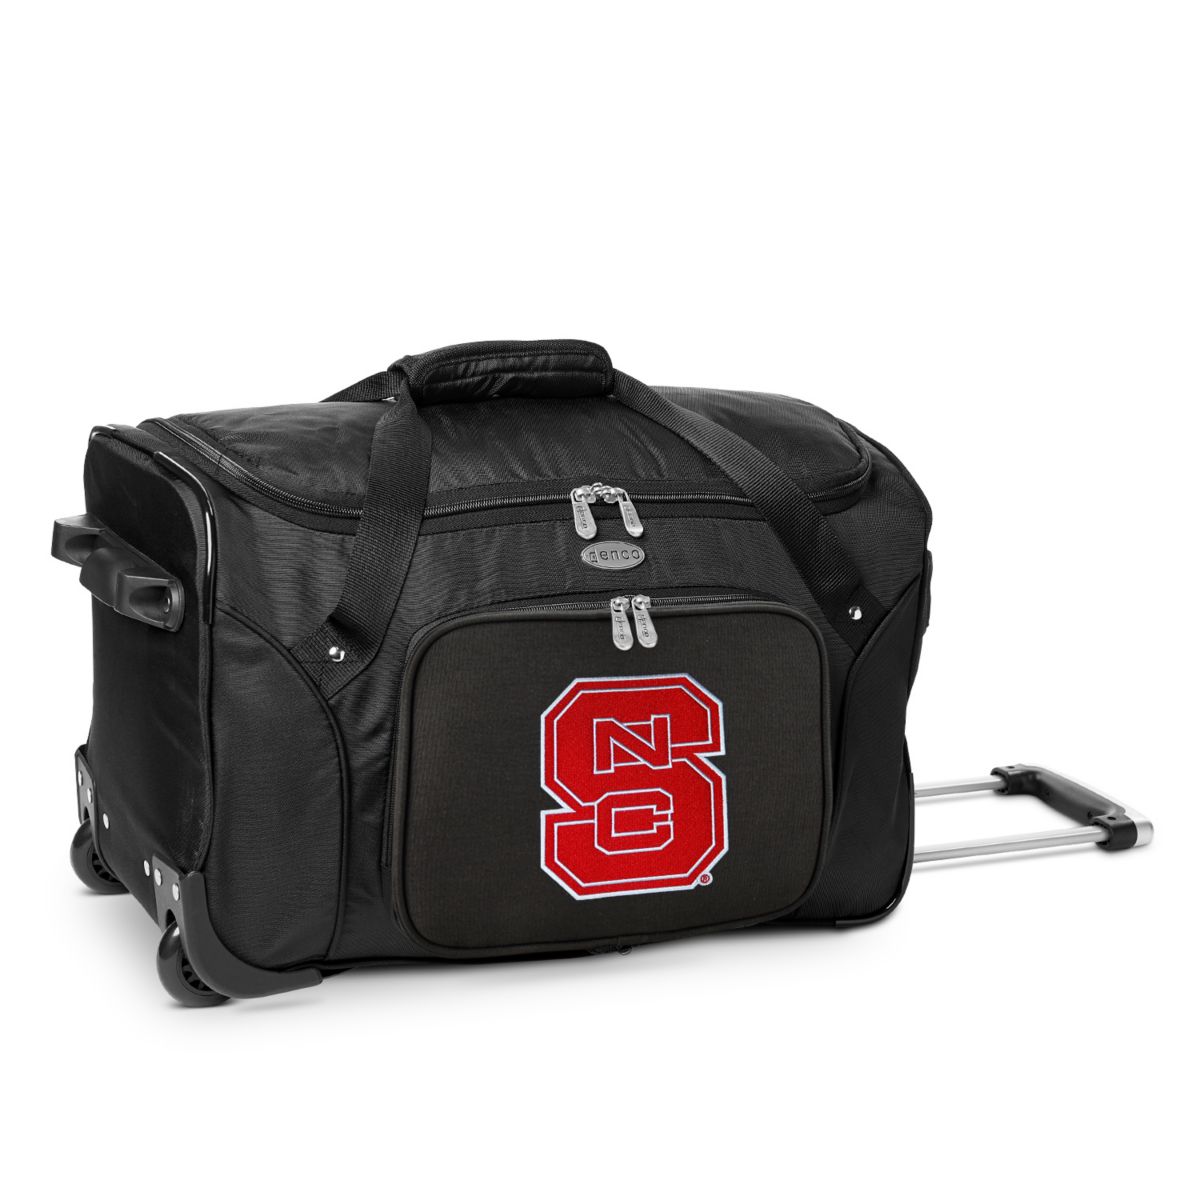 Спортивная сумка Denco North Carolina State Wolfpack 22 дюйма на колесиках Denco